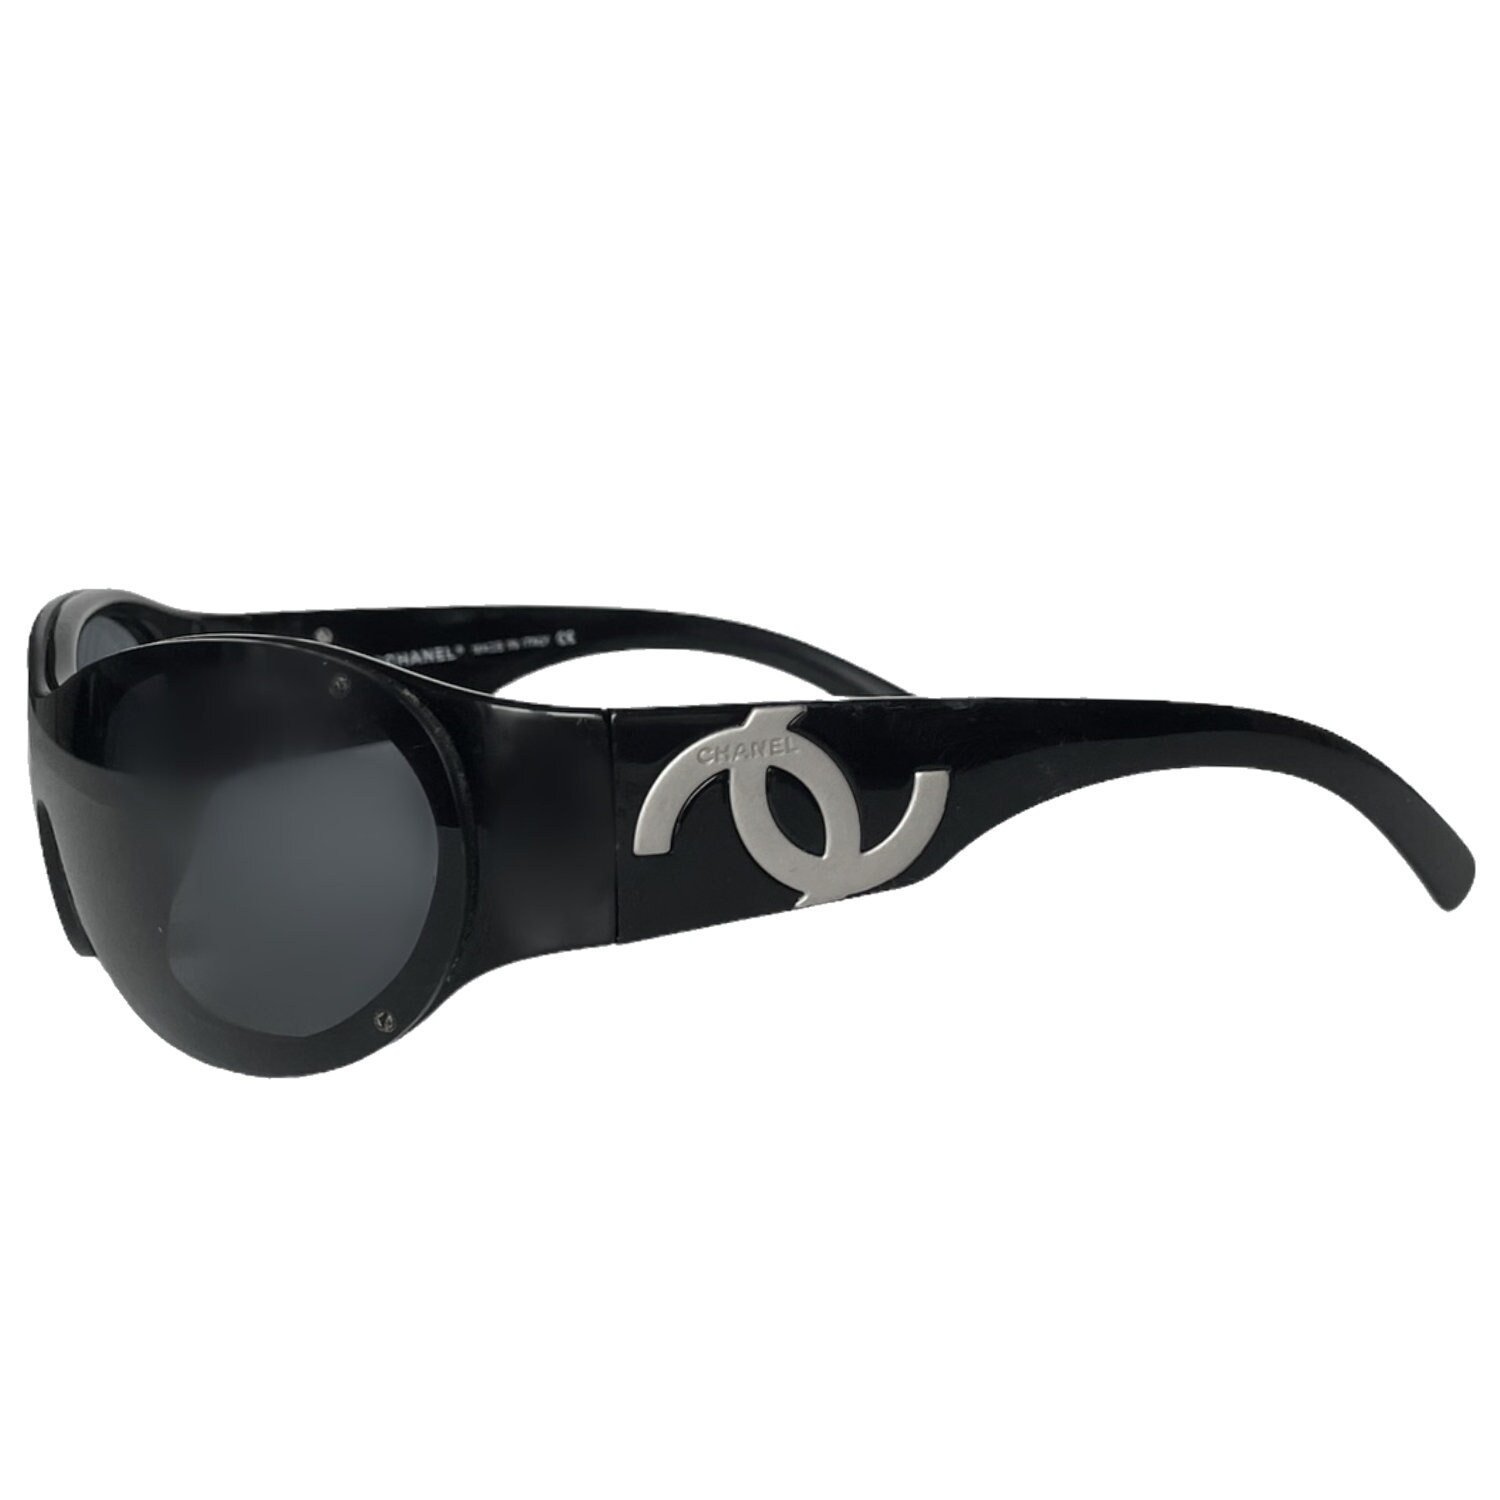 Chanel Sunglasses Authentic Chanel Logo Wraparound 